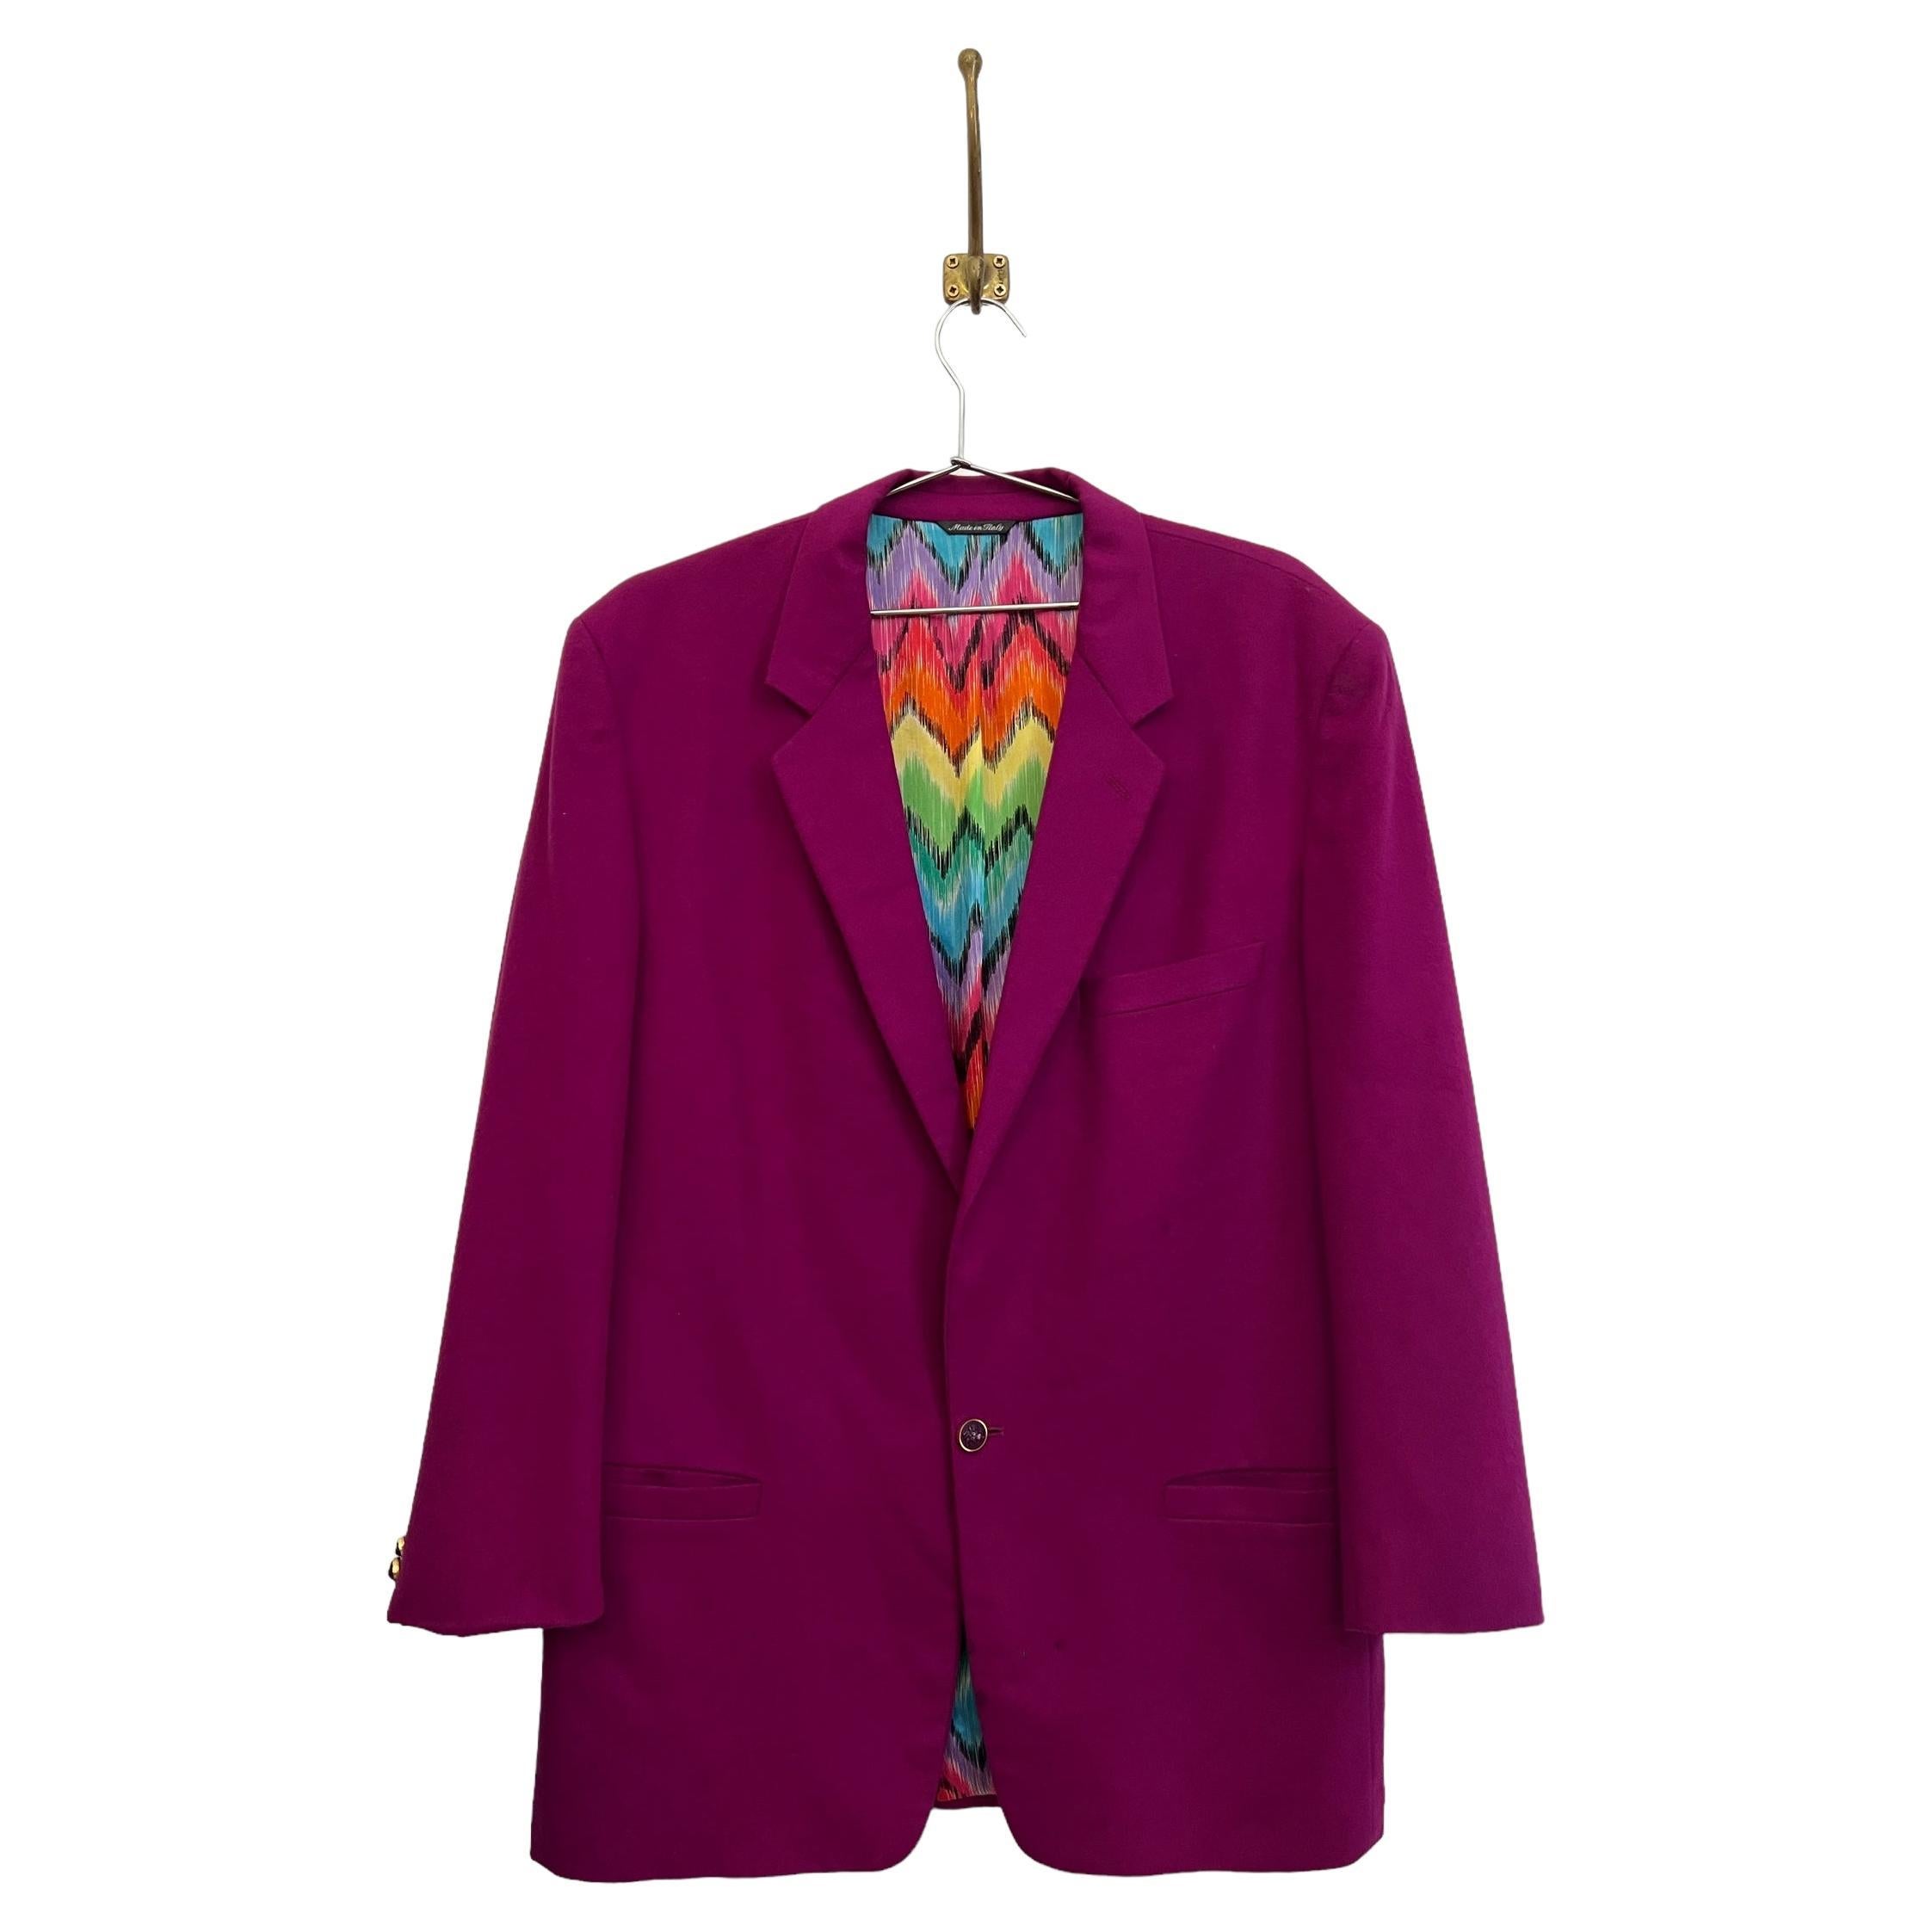 Versus by Gianni Versace Magenta Rosa Regenbogen gefütterte Kaschmirblazer Anzug Jacke